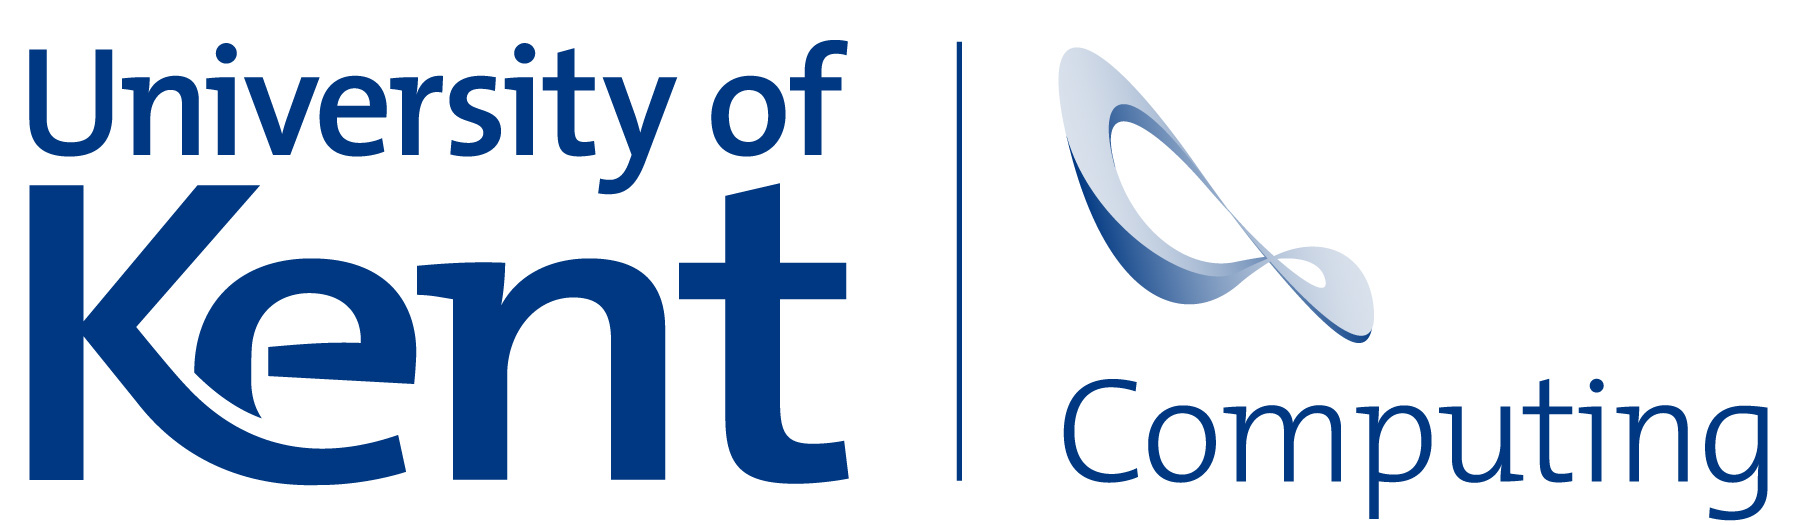 University of Kent School of Computing logo